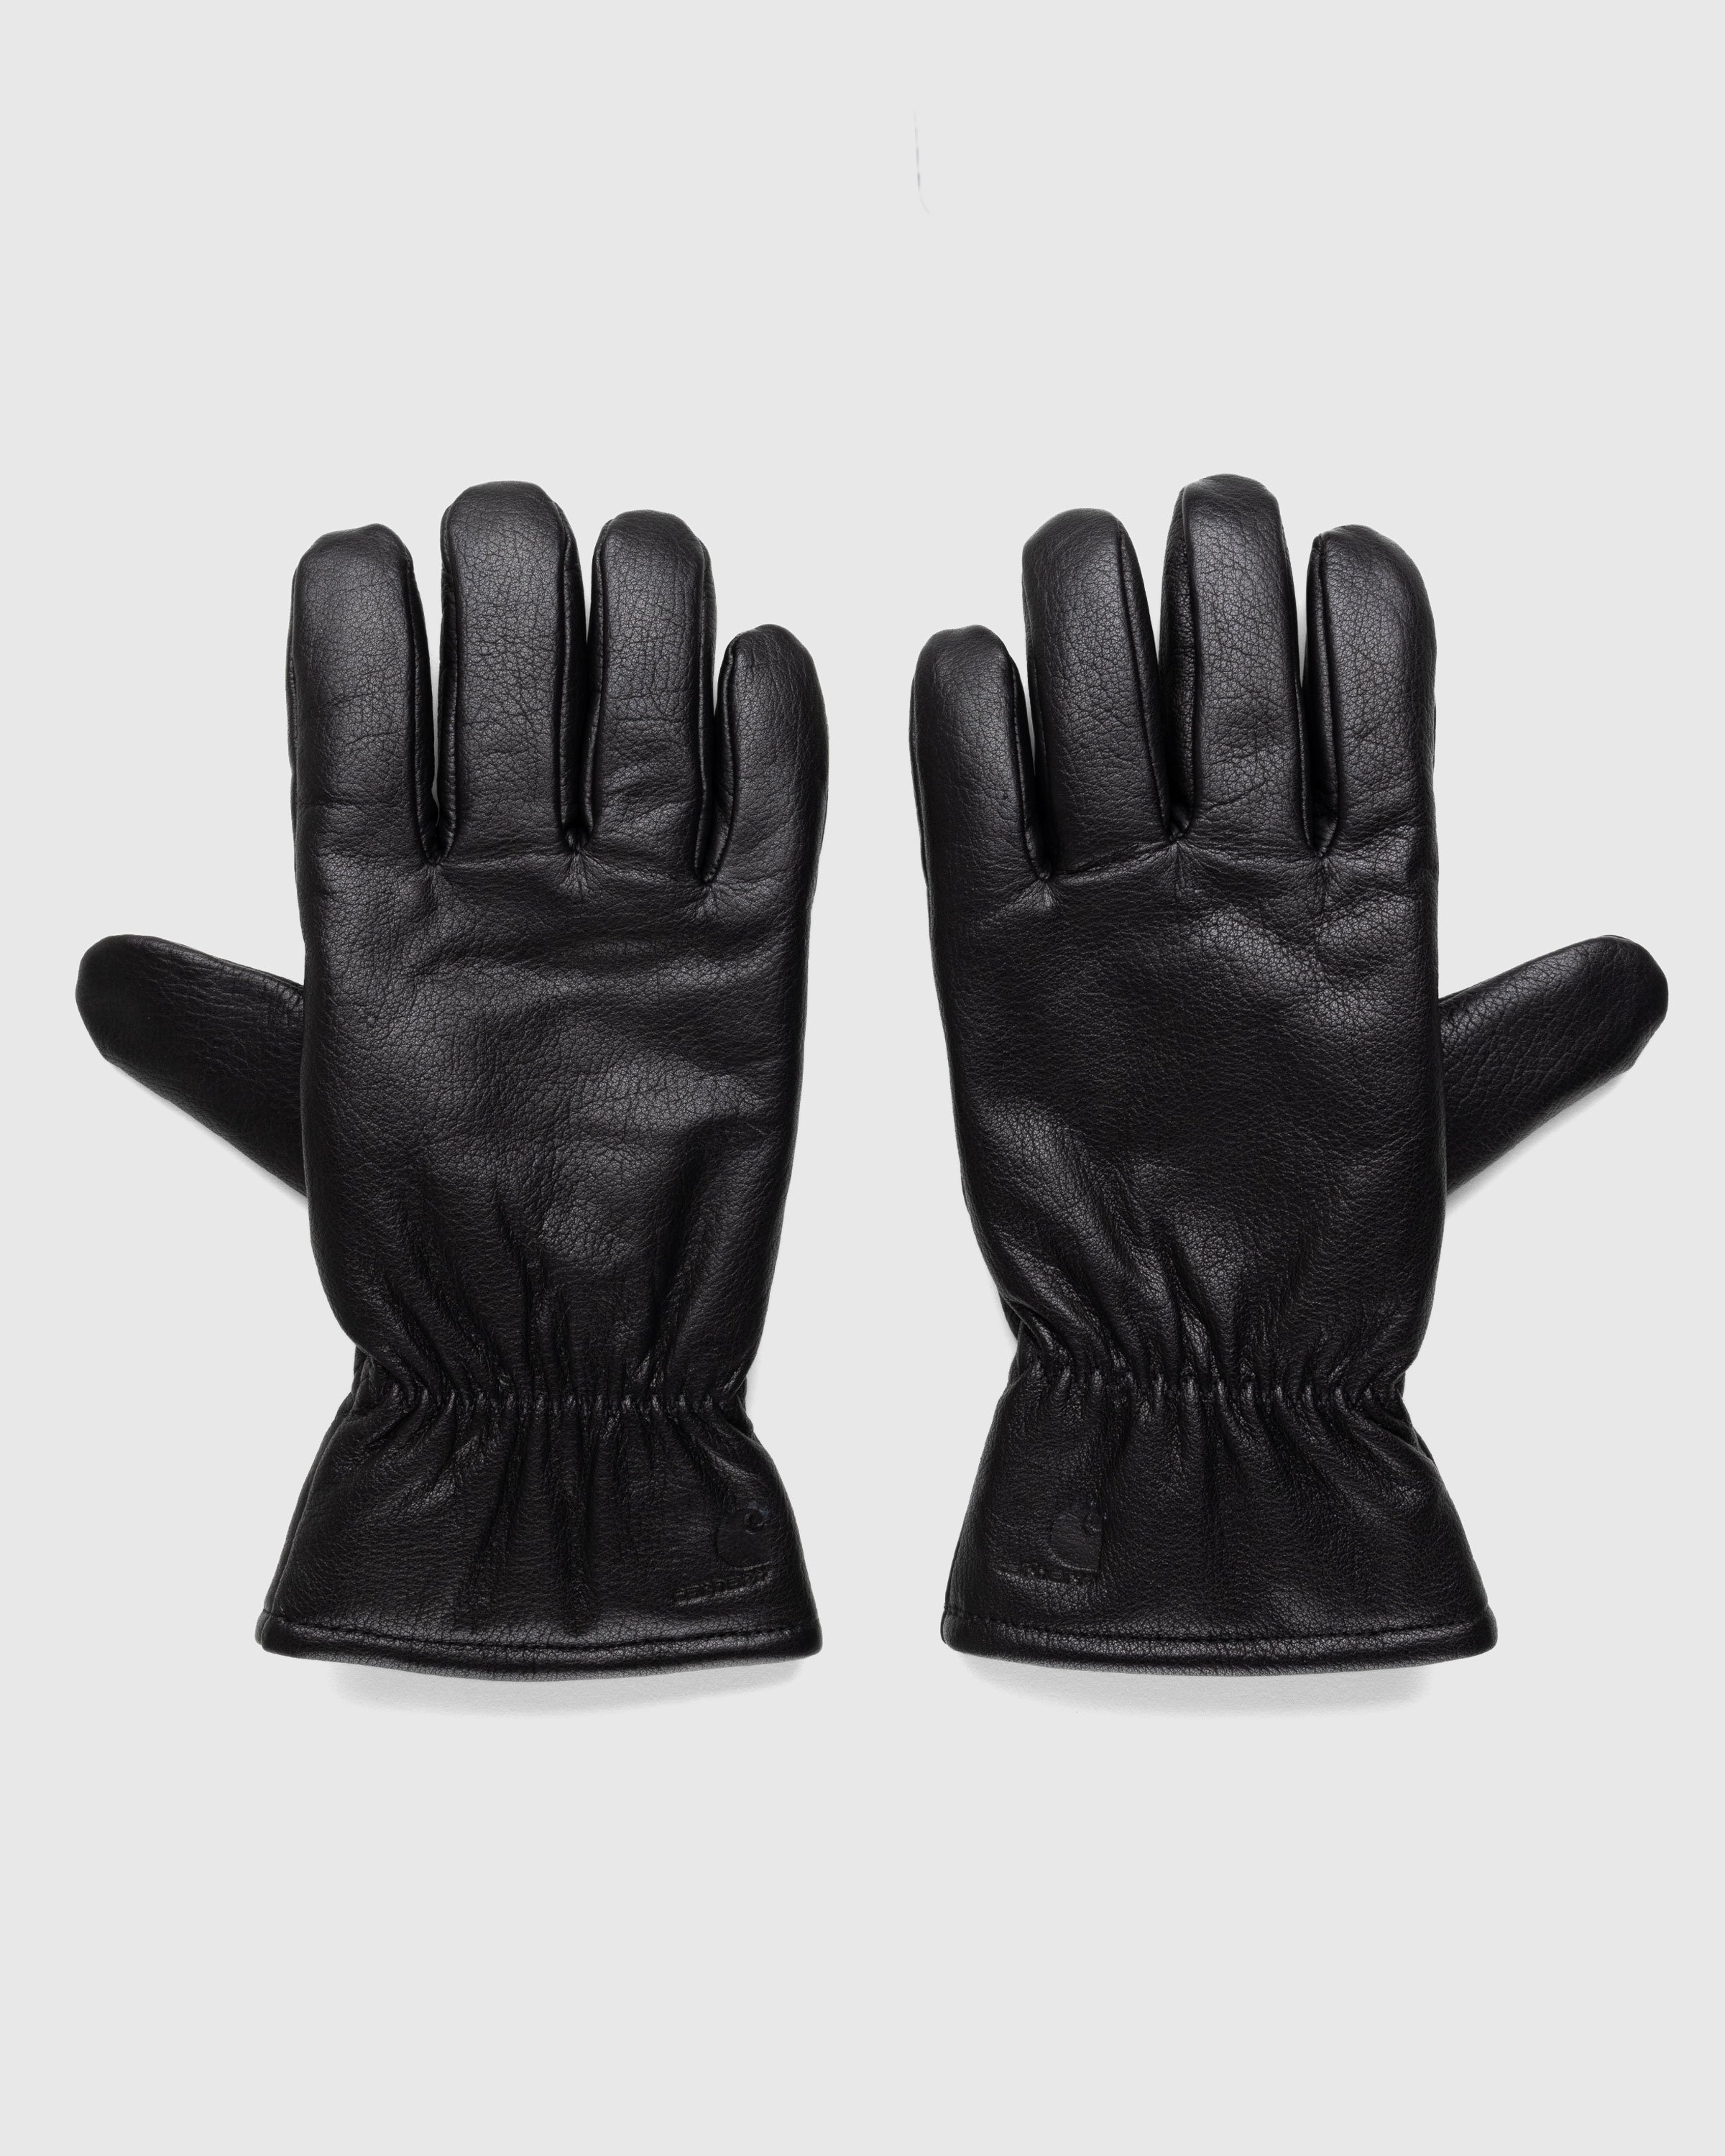 Carhartt WIP - Fonda Gloves Black - Accessories - Black - Image 1